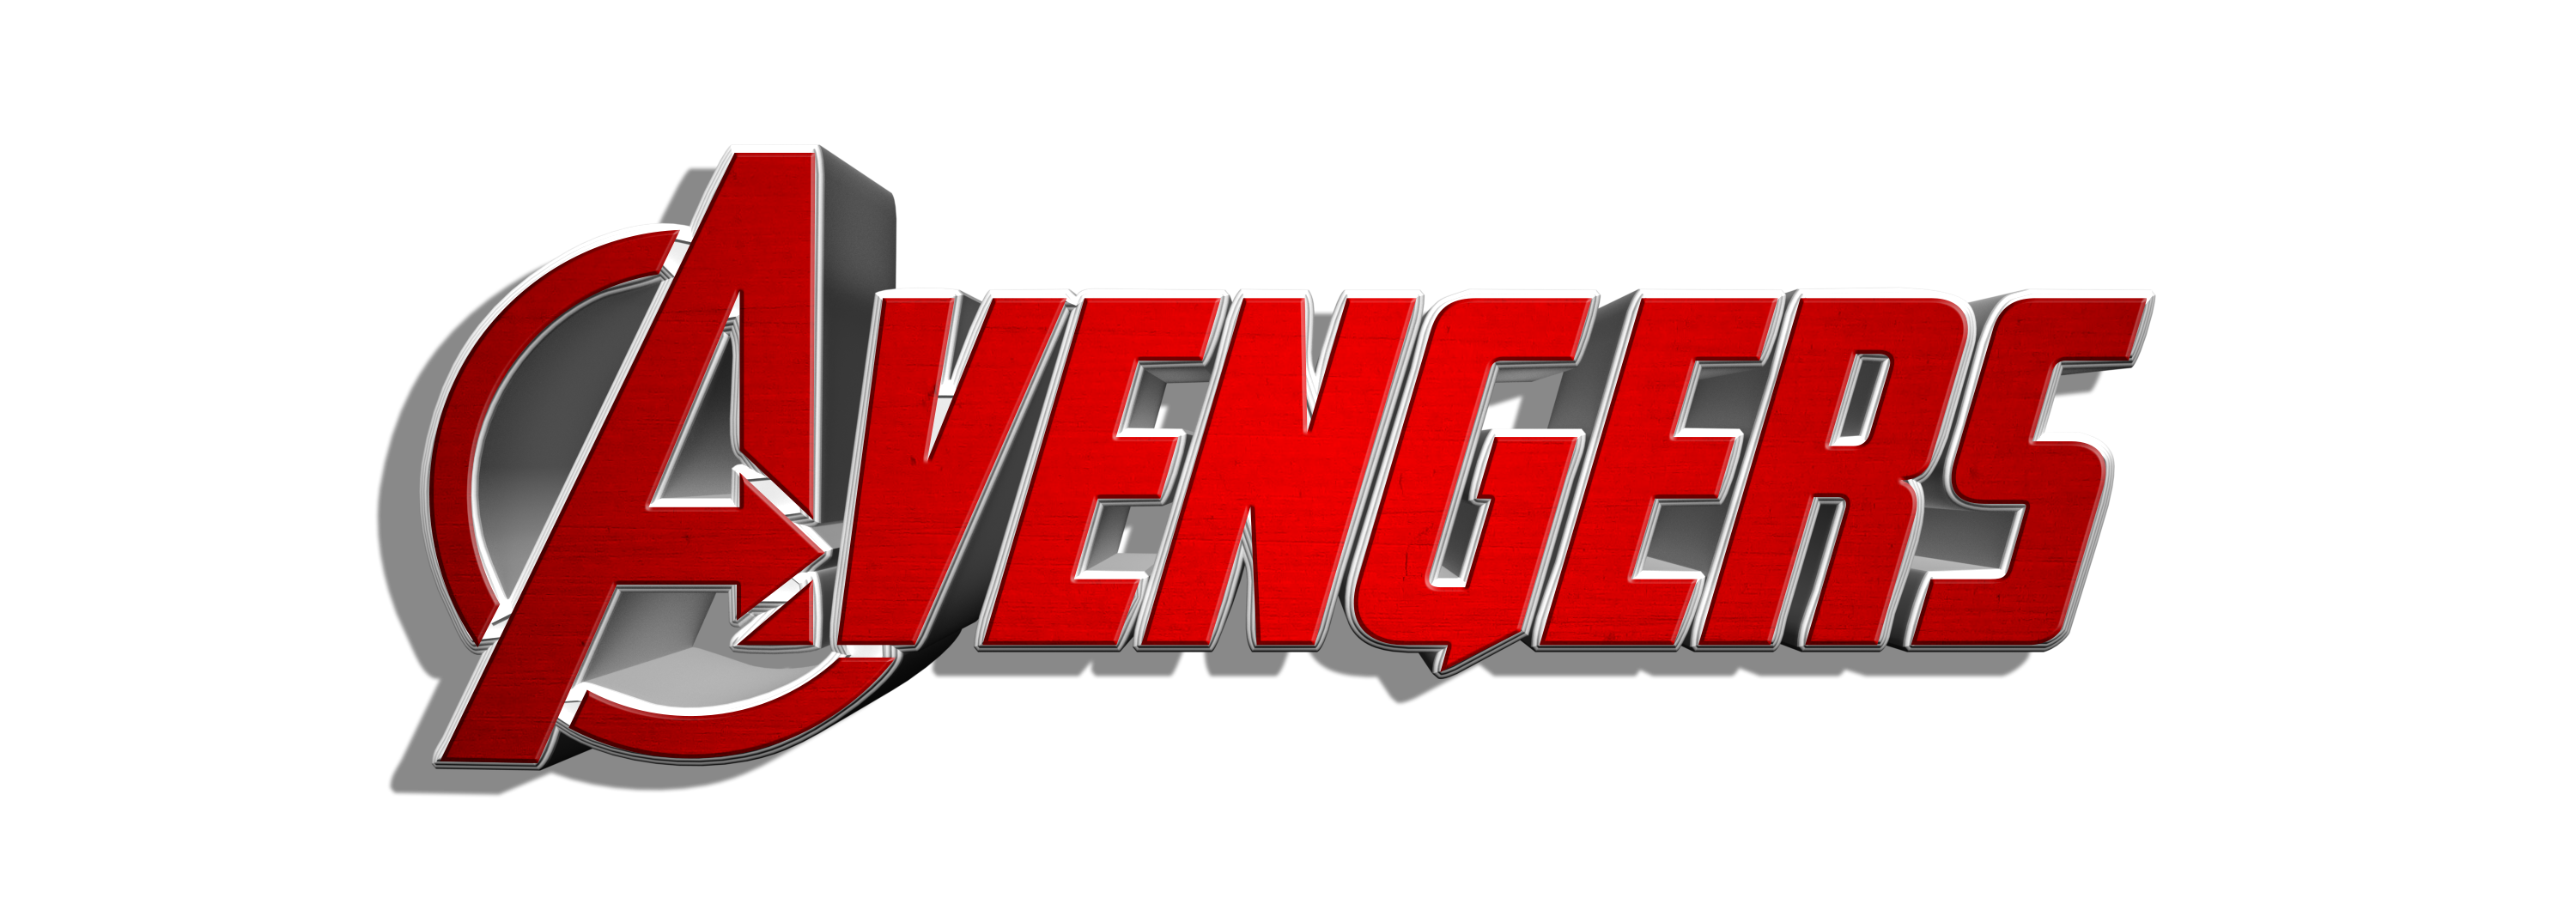 Vengeurs logo PNG Image